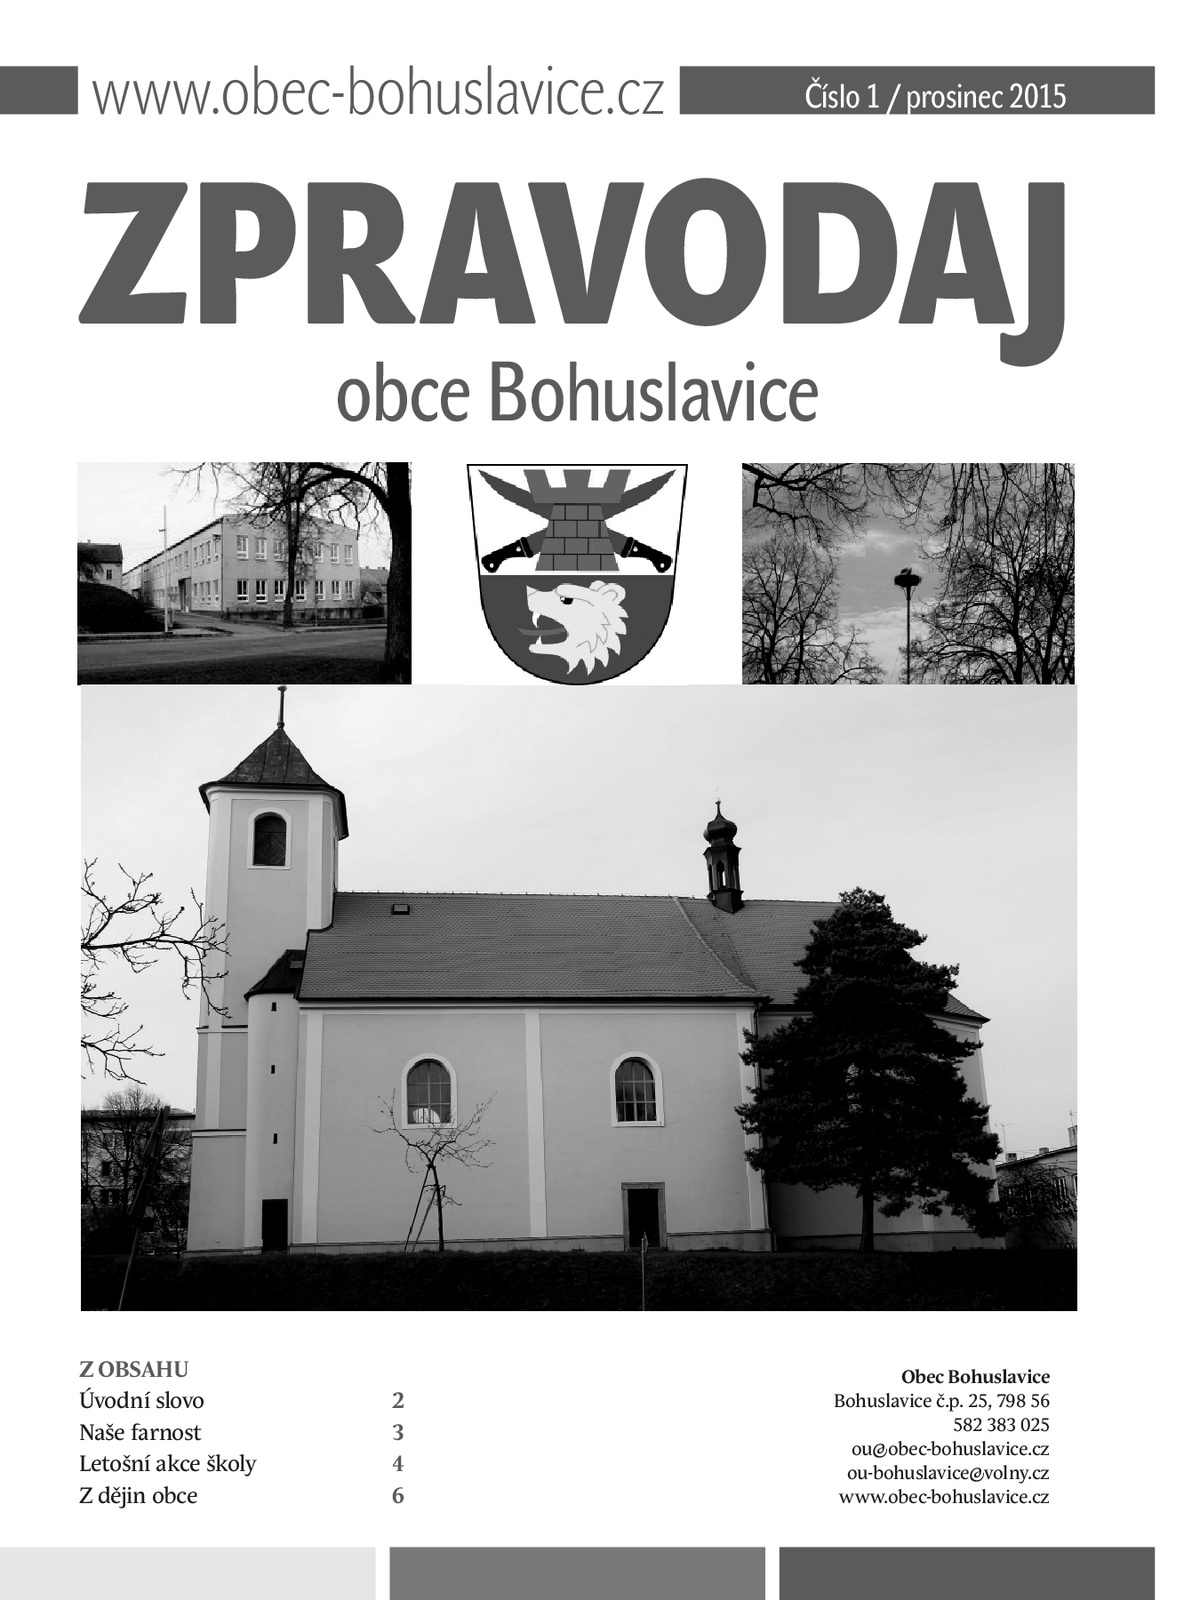 Zpravodaj obce Bohuslavice 1_2015 (nádhled).jpg